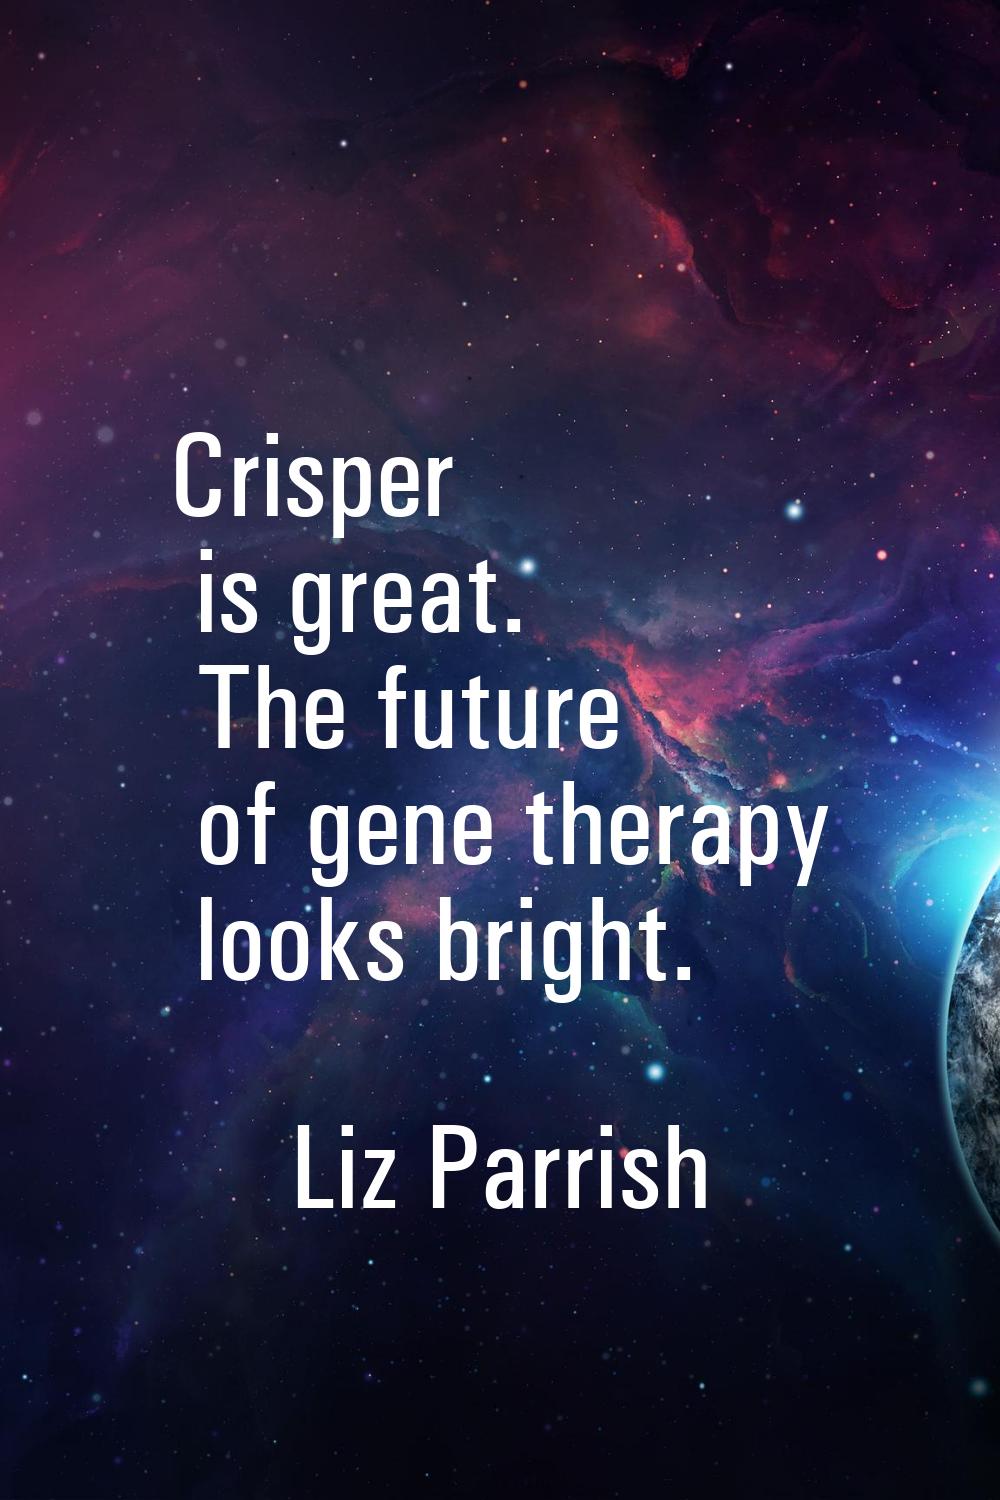 Crisper is great. The future of gene therapy looks bright.